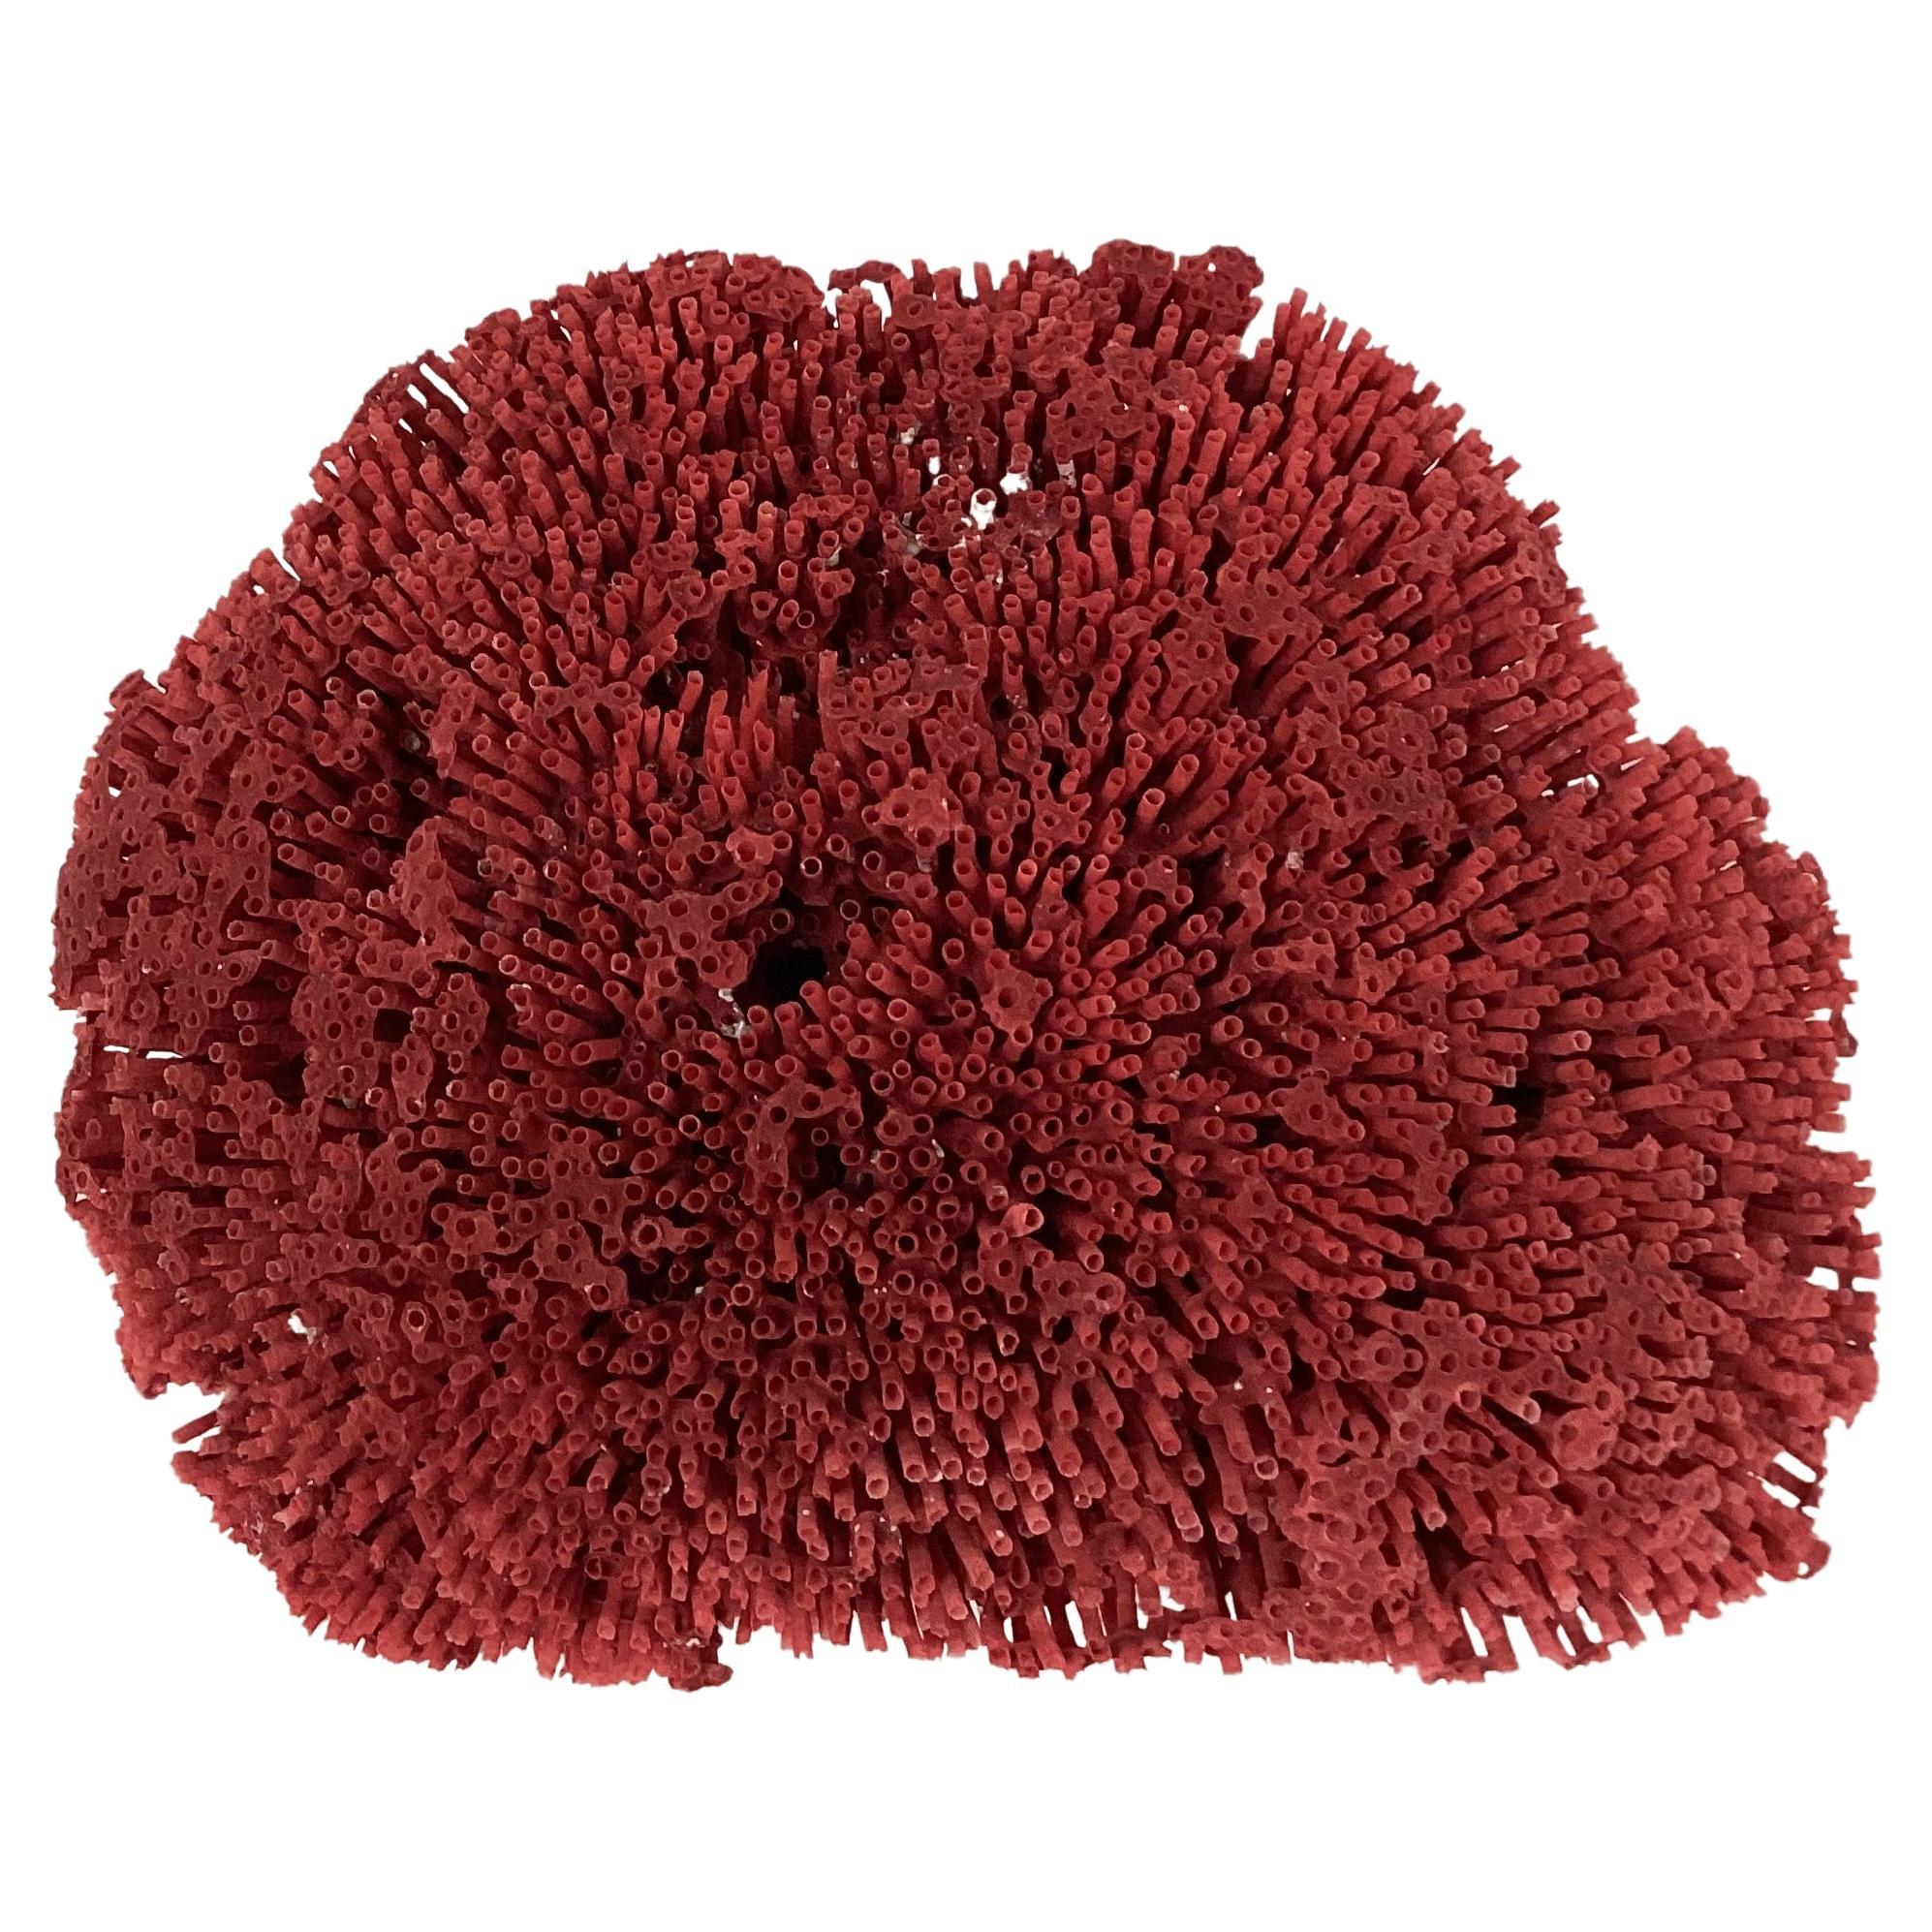 Natural Red Pipe Coral Specimen